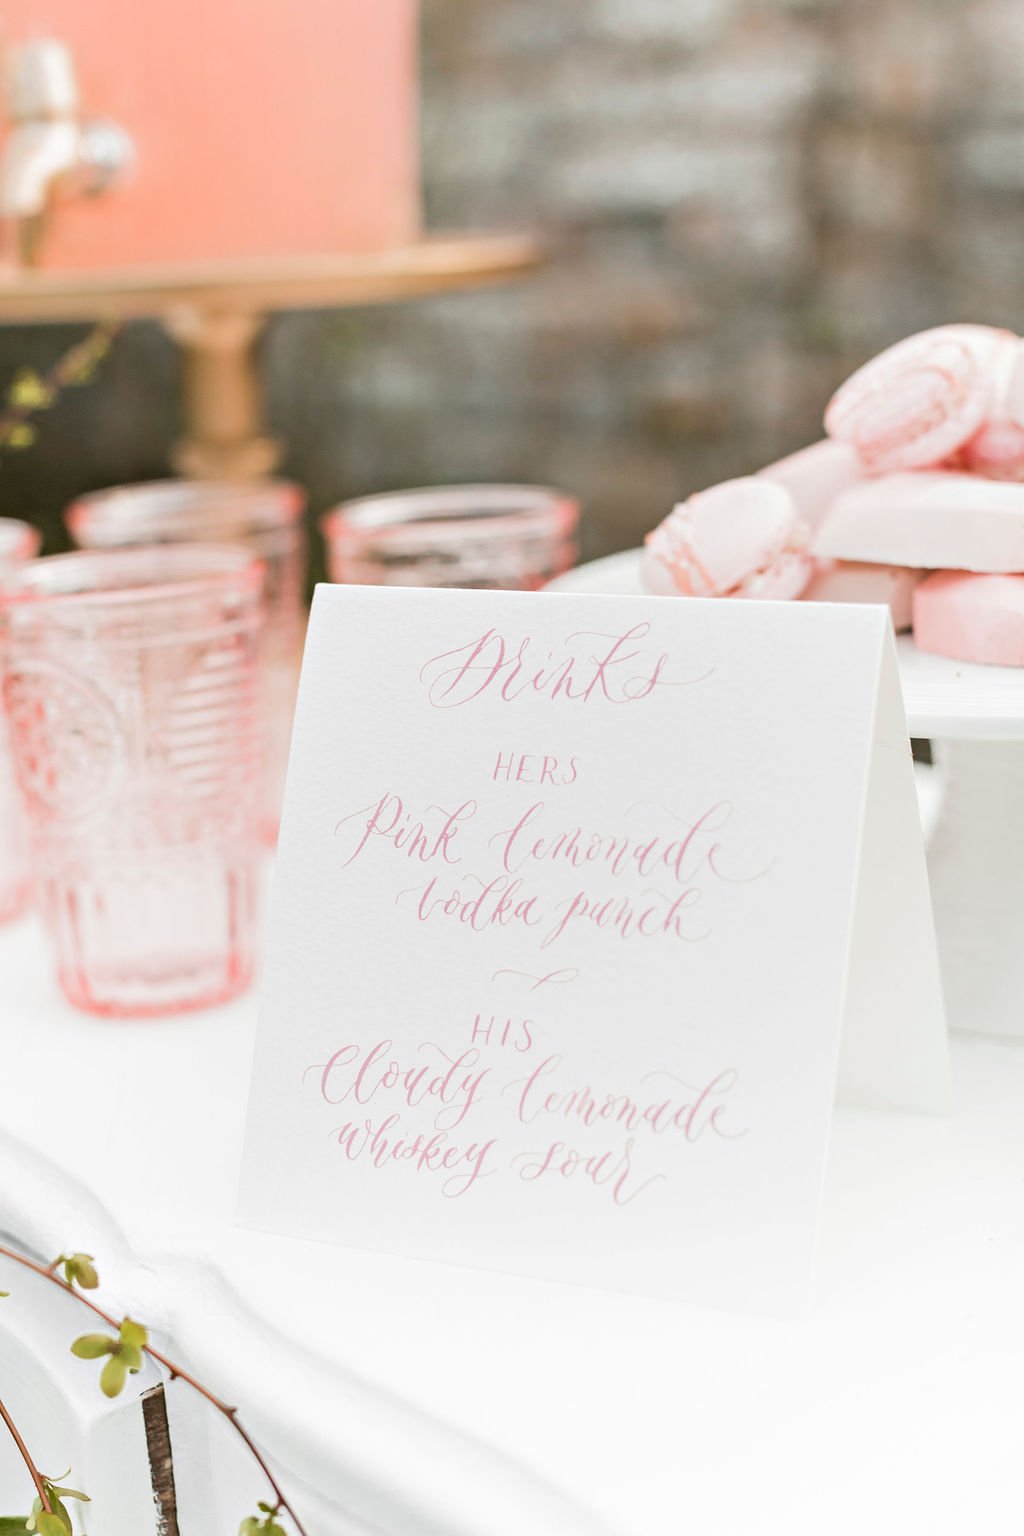 Calligraphy drinks menu for wedding